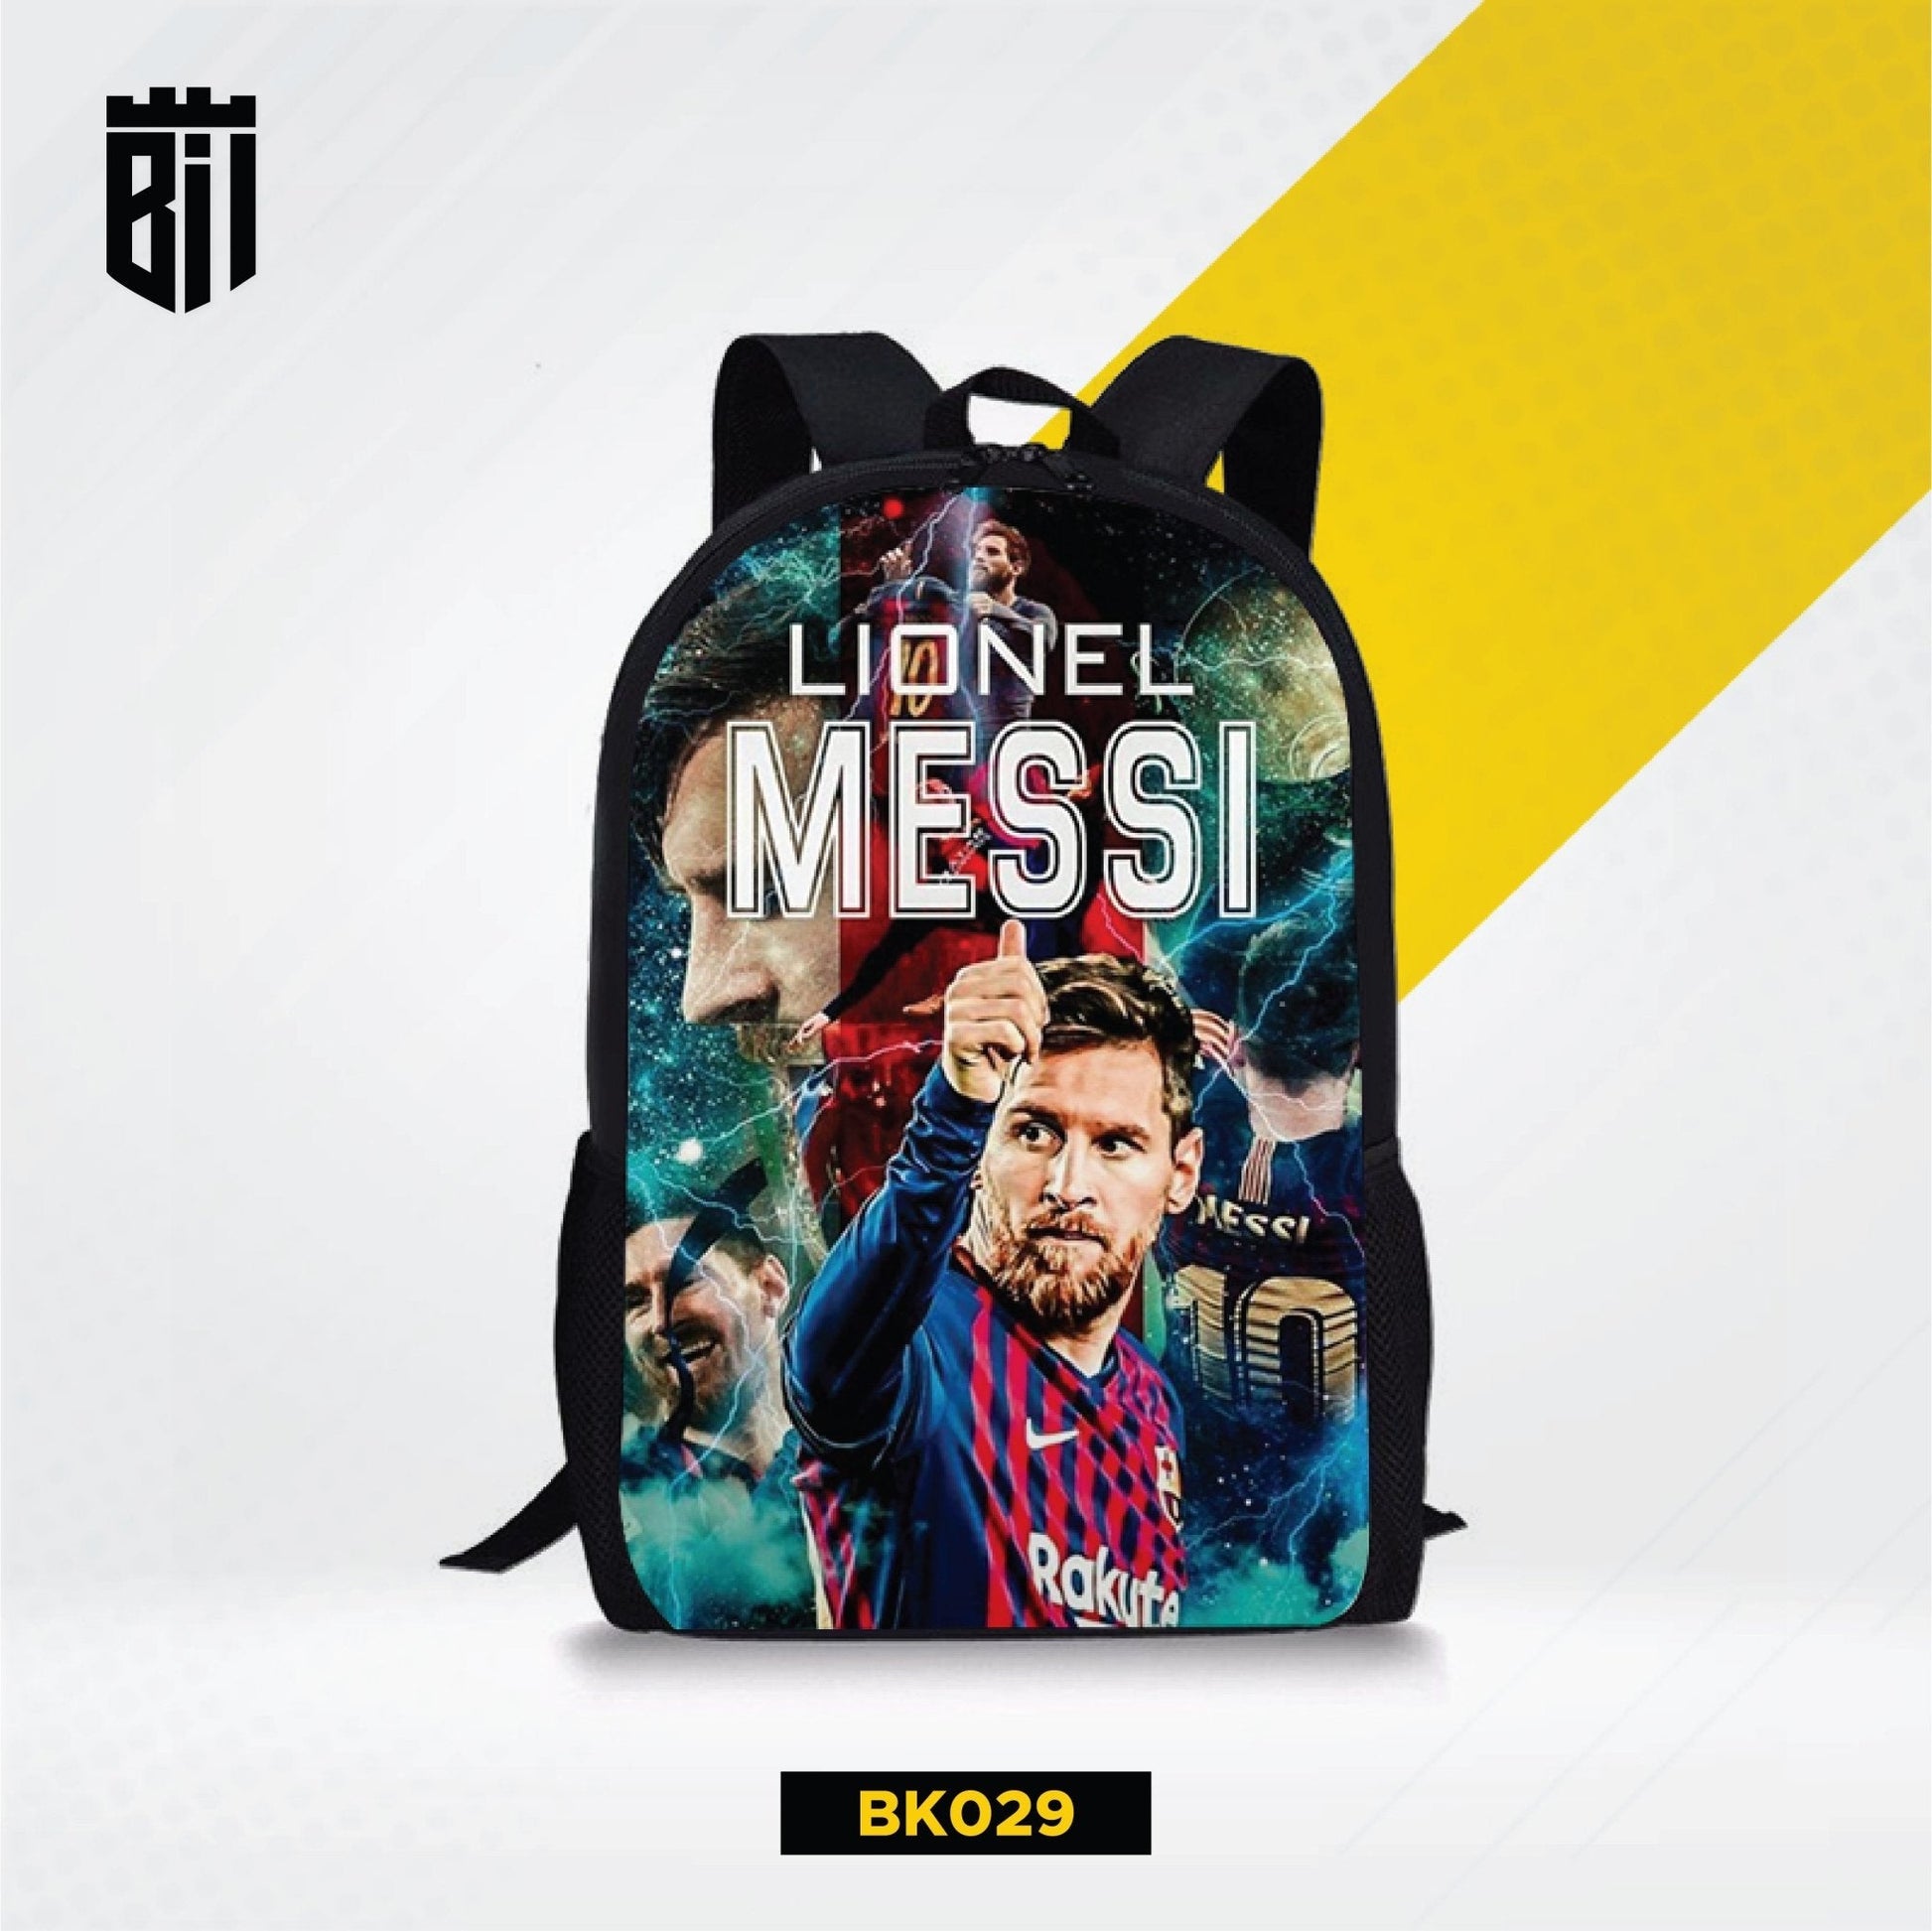 BK029 Lionel Messi Backpack - BREACHIT